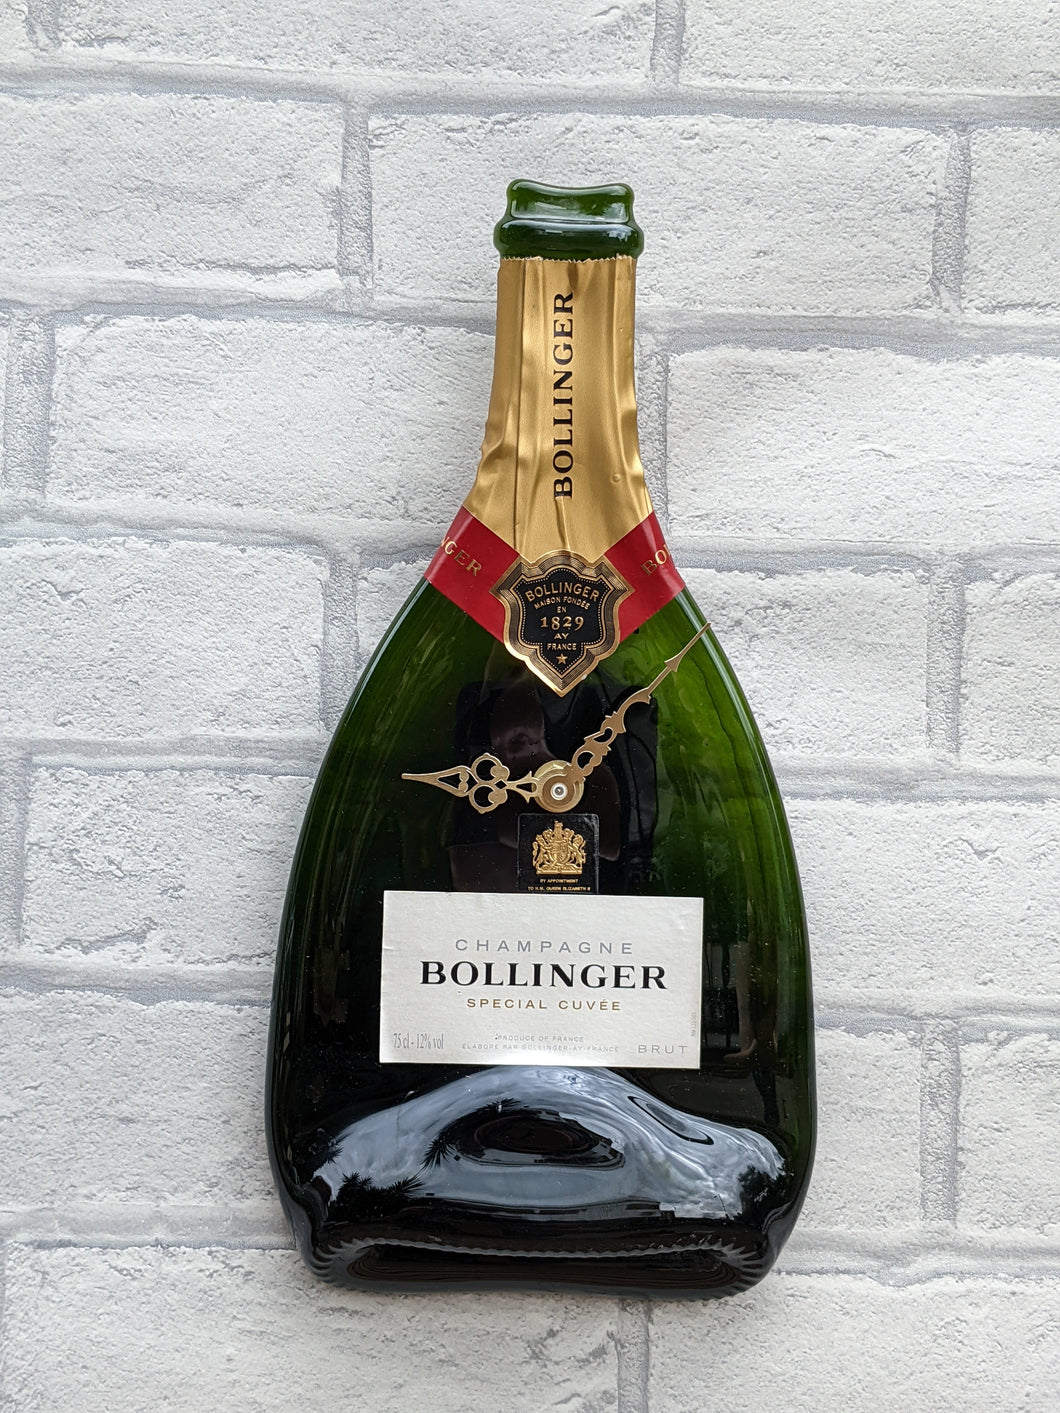 Bollinger Champagne bottle clock